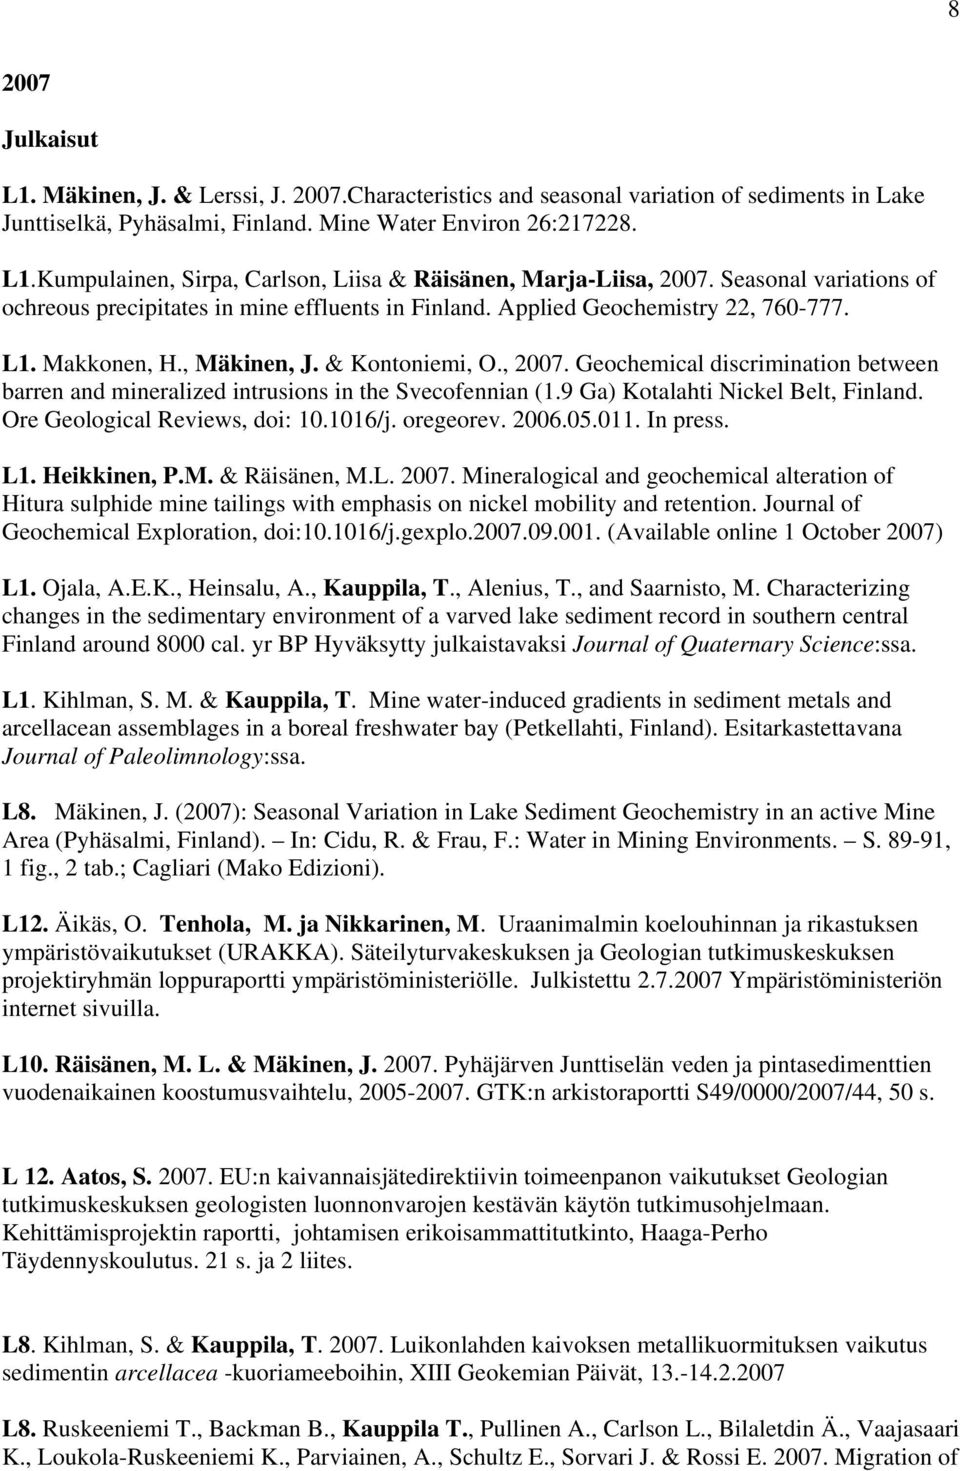 Geochemical discrimination between barren and mineralized intrusions in the Svecofennian (1.9 Ga) Kotalahti Nickel Belt, Finland. Ore Geological Reviews, doi: 10.1016/j. oregeorev. 2006.05.011.